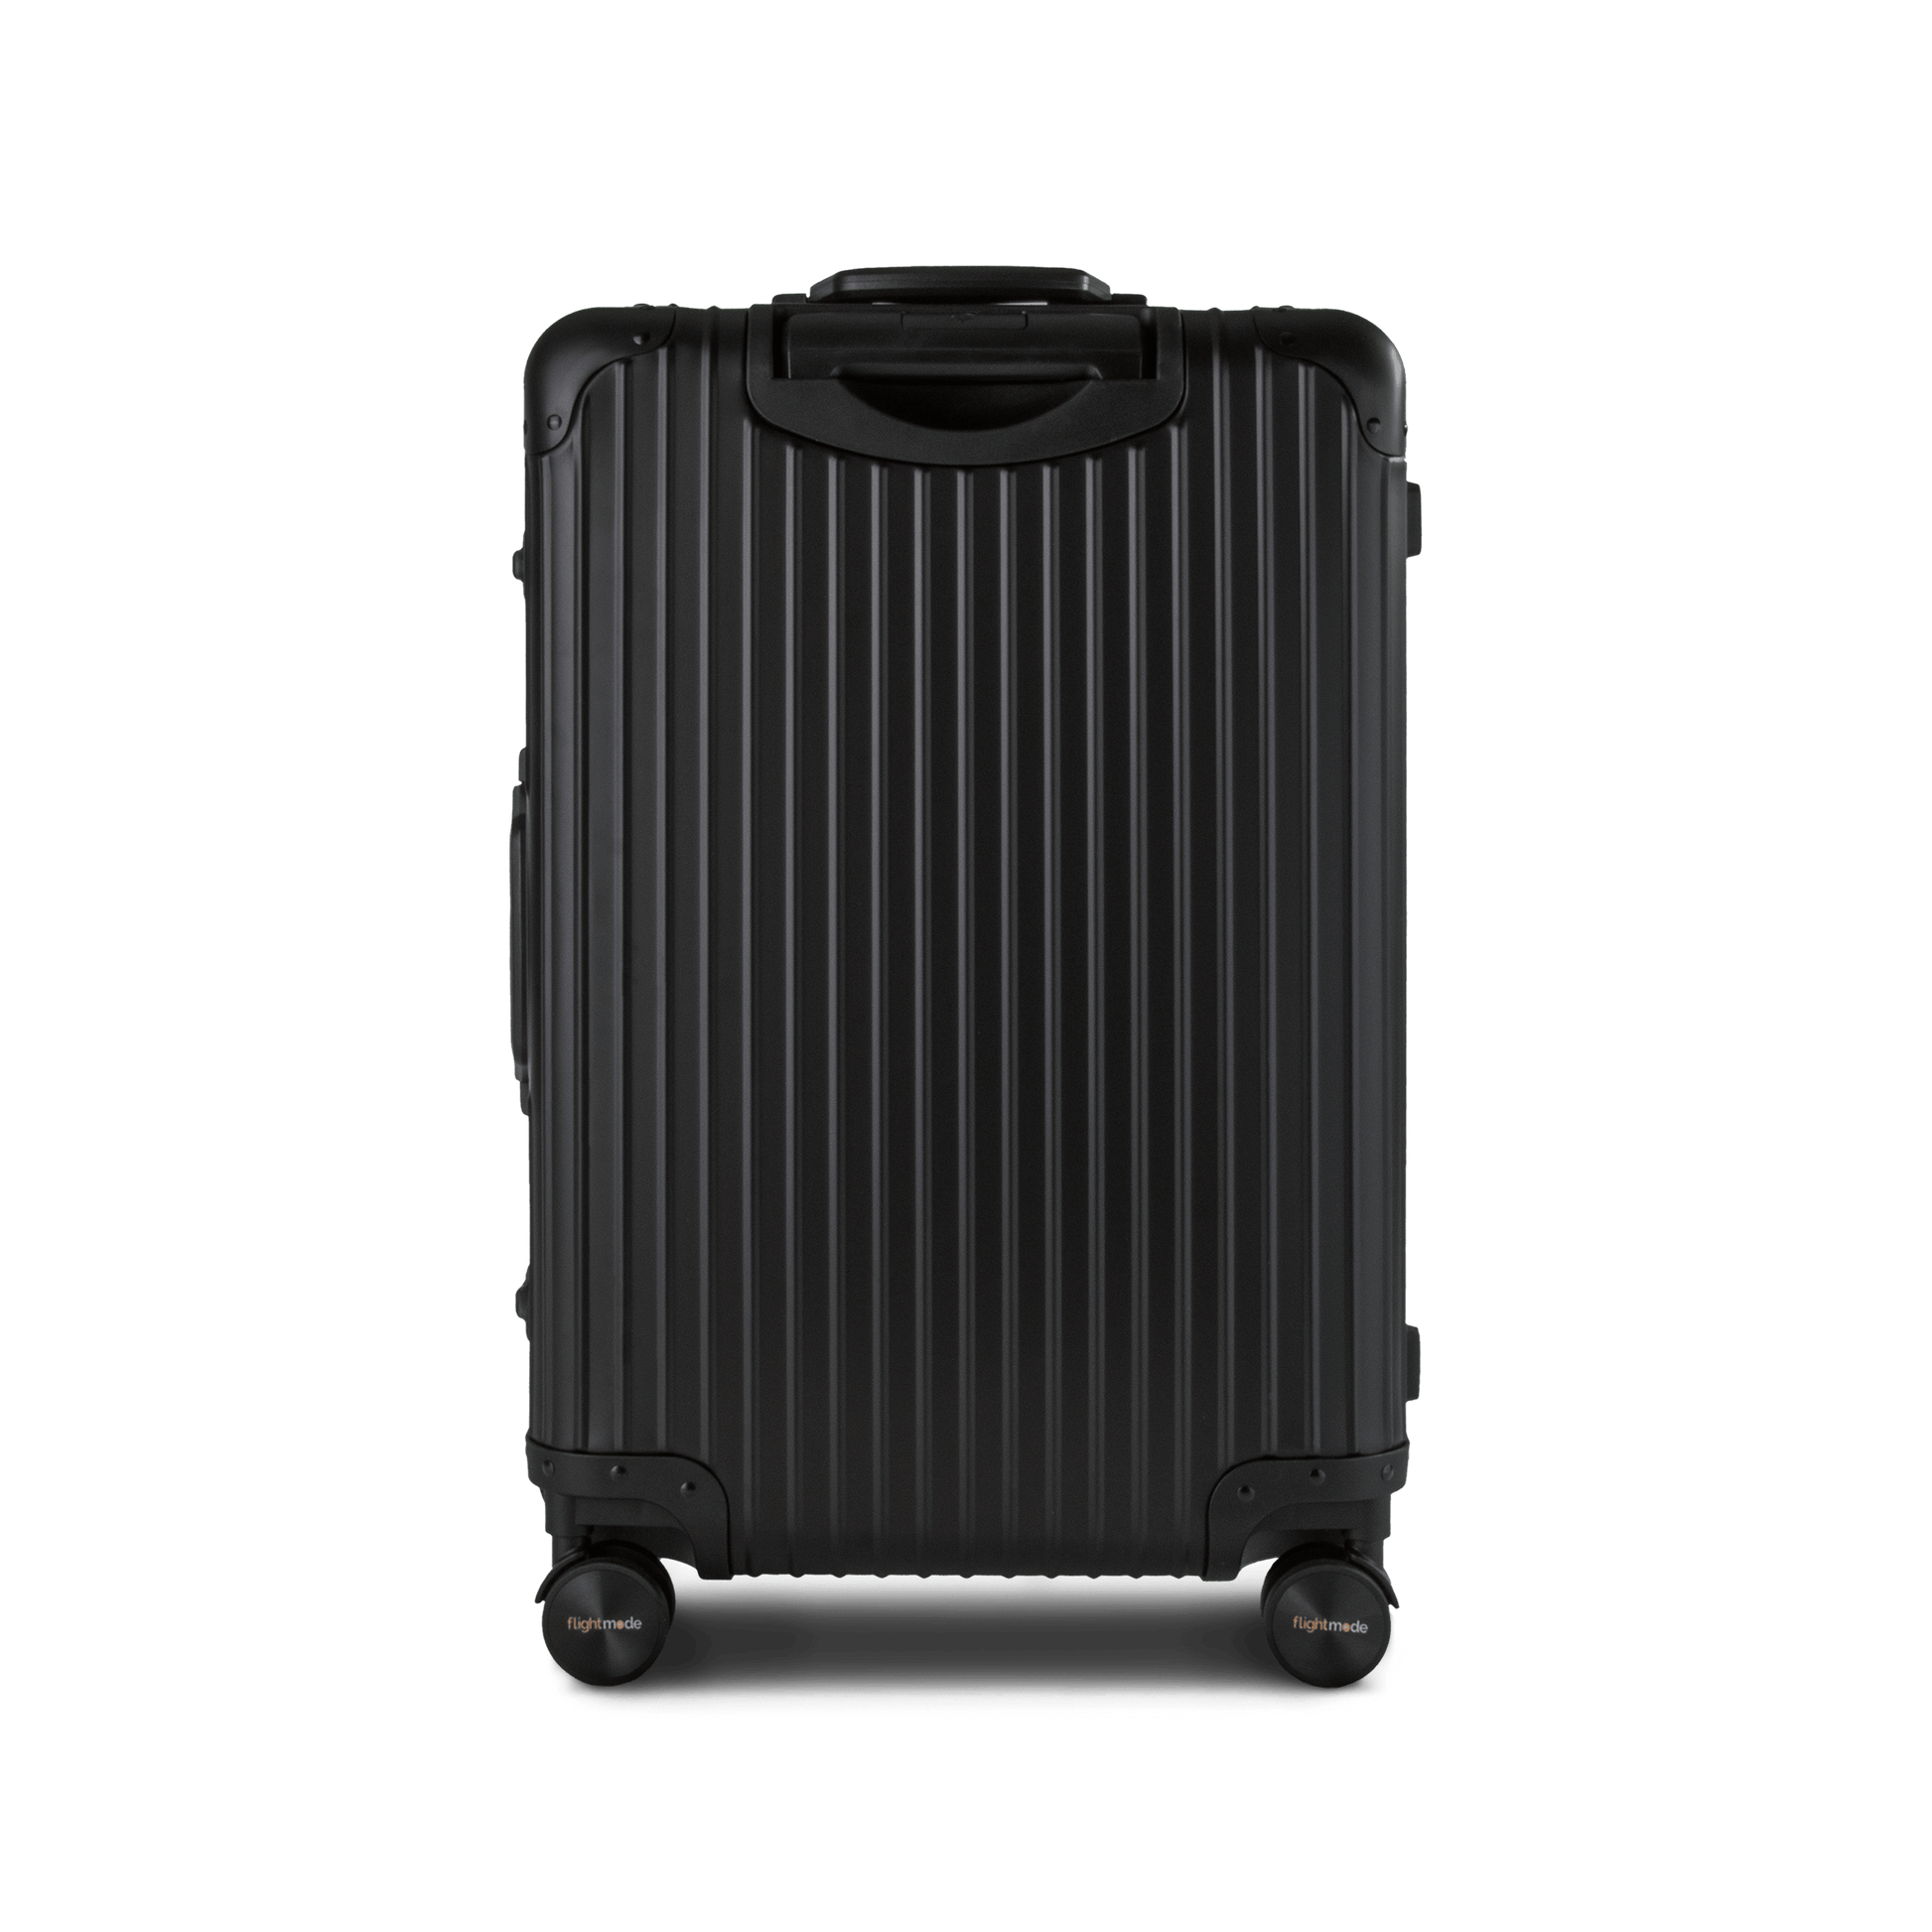 Flightmode Luggage & Bags Flightmode Travel Suitcase Large